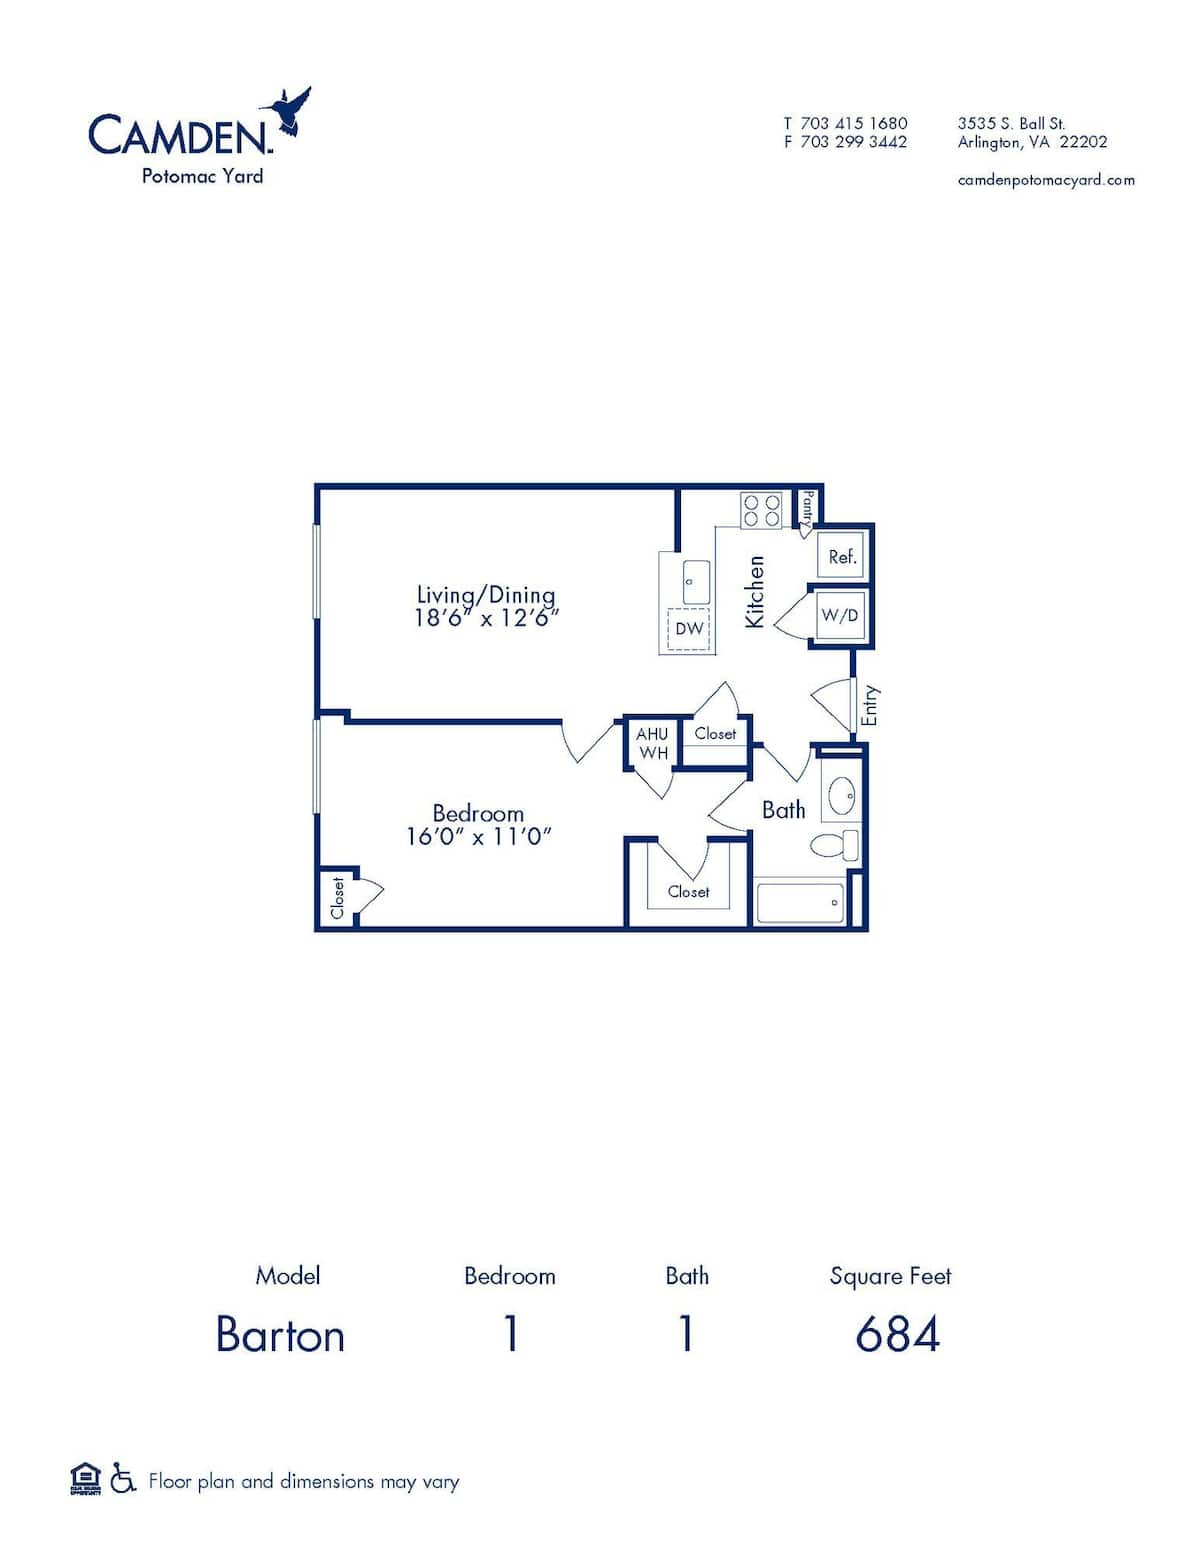 Floorplan diagram for Barton, showing 1 bedroom